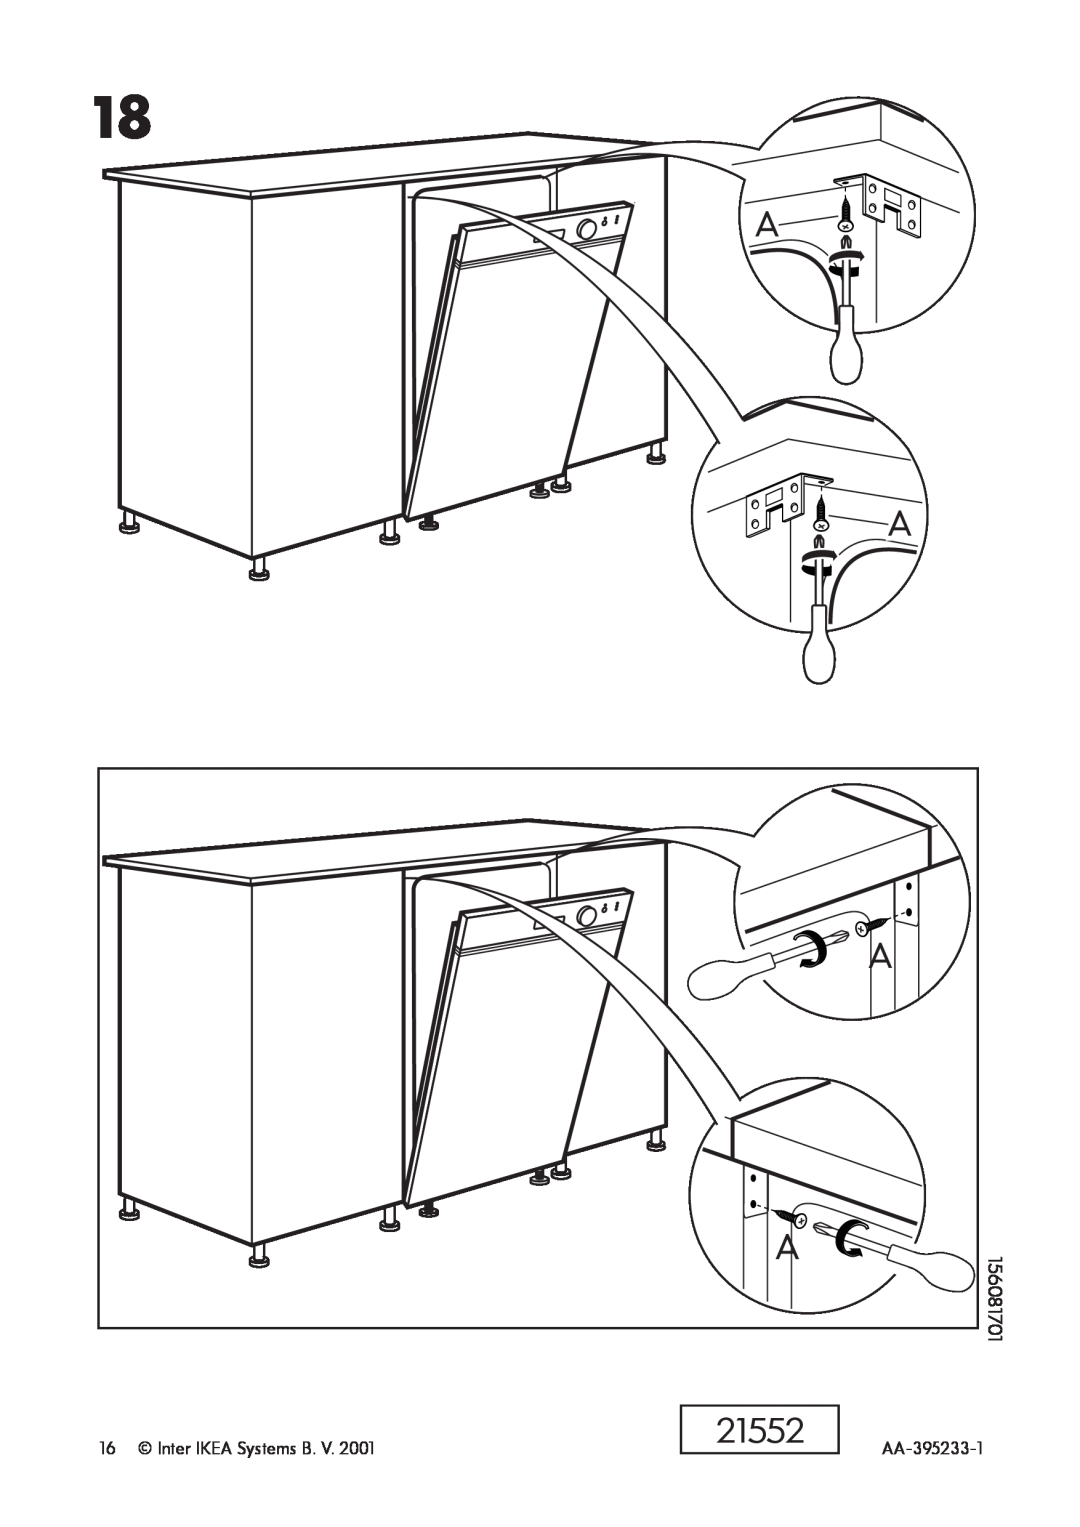 IKEA DW60 manual 21552, Inter IKEA Systems B, AA-395233-1, 81701, 1560 